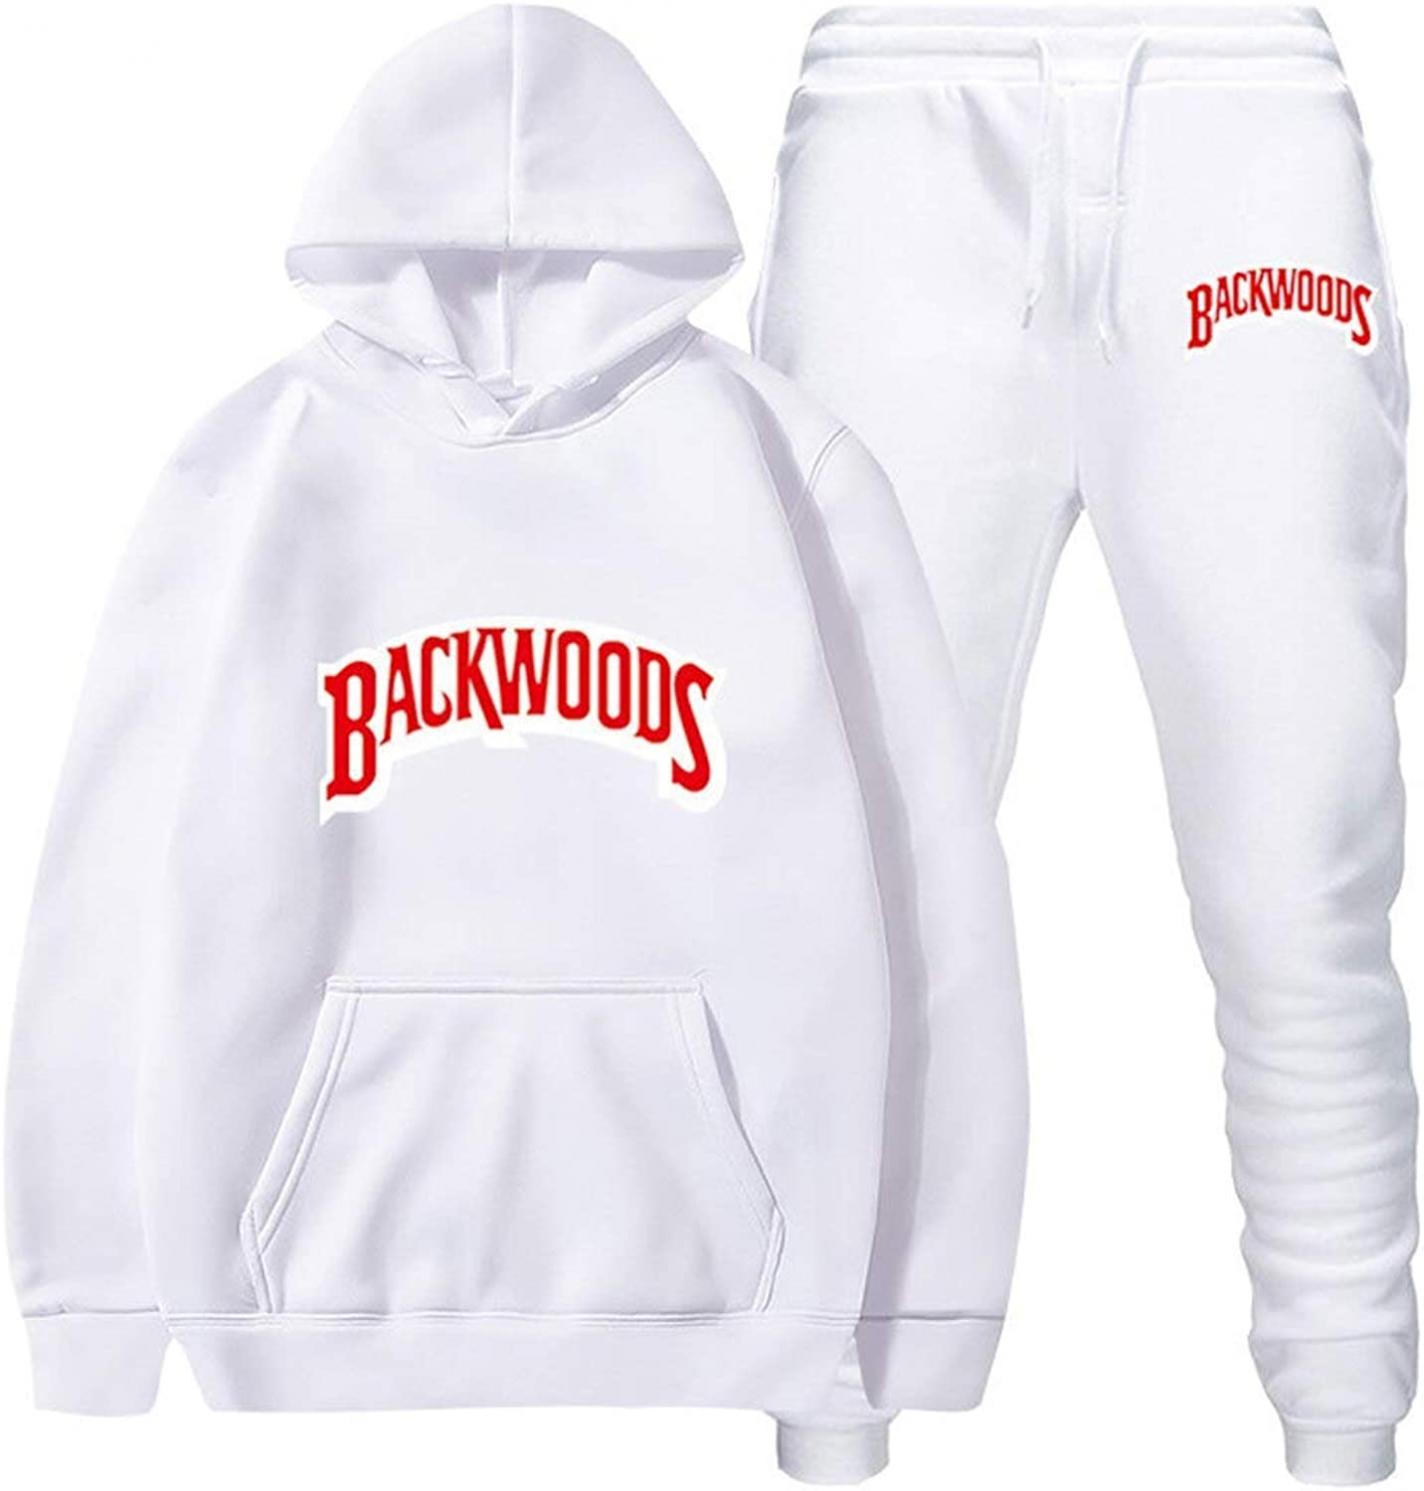 DISINIBITA Backwoods Hoodies and Pants Fashion Causal Sport Suit for Men Women